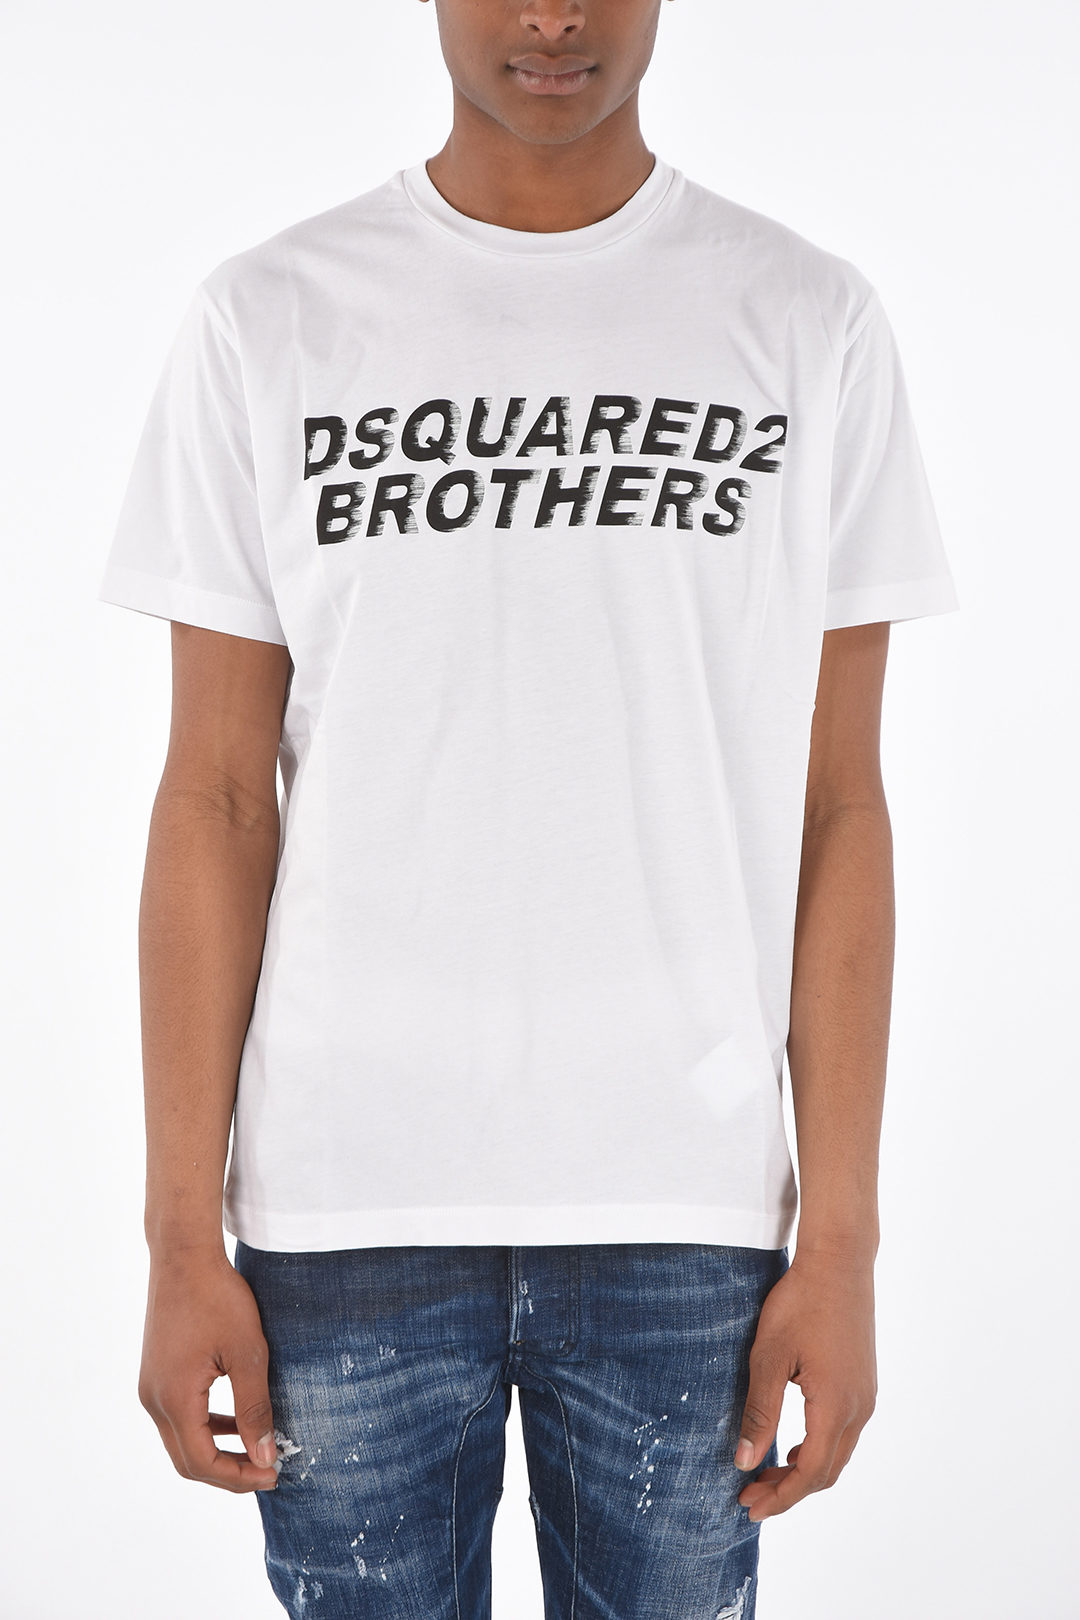 Dsquared Brothers T Shirt | ubicaciondepersonas.cdmx.gob.mx